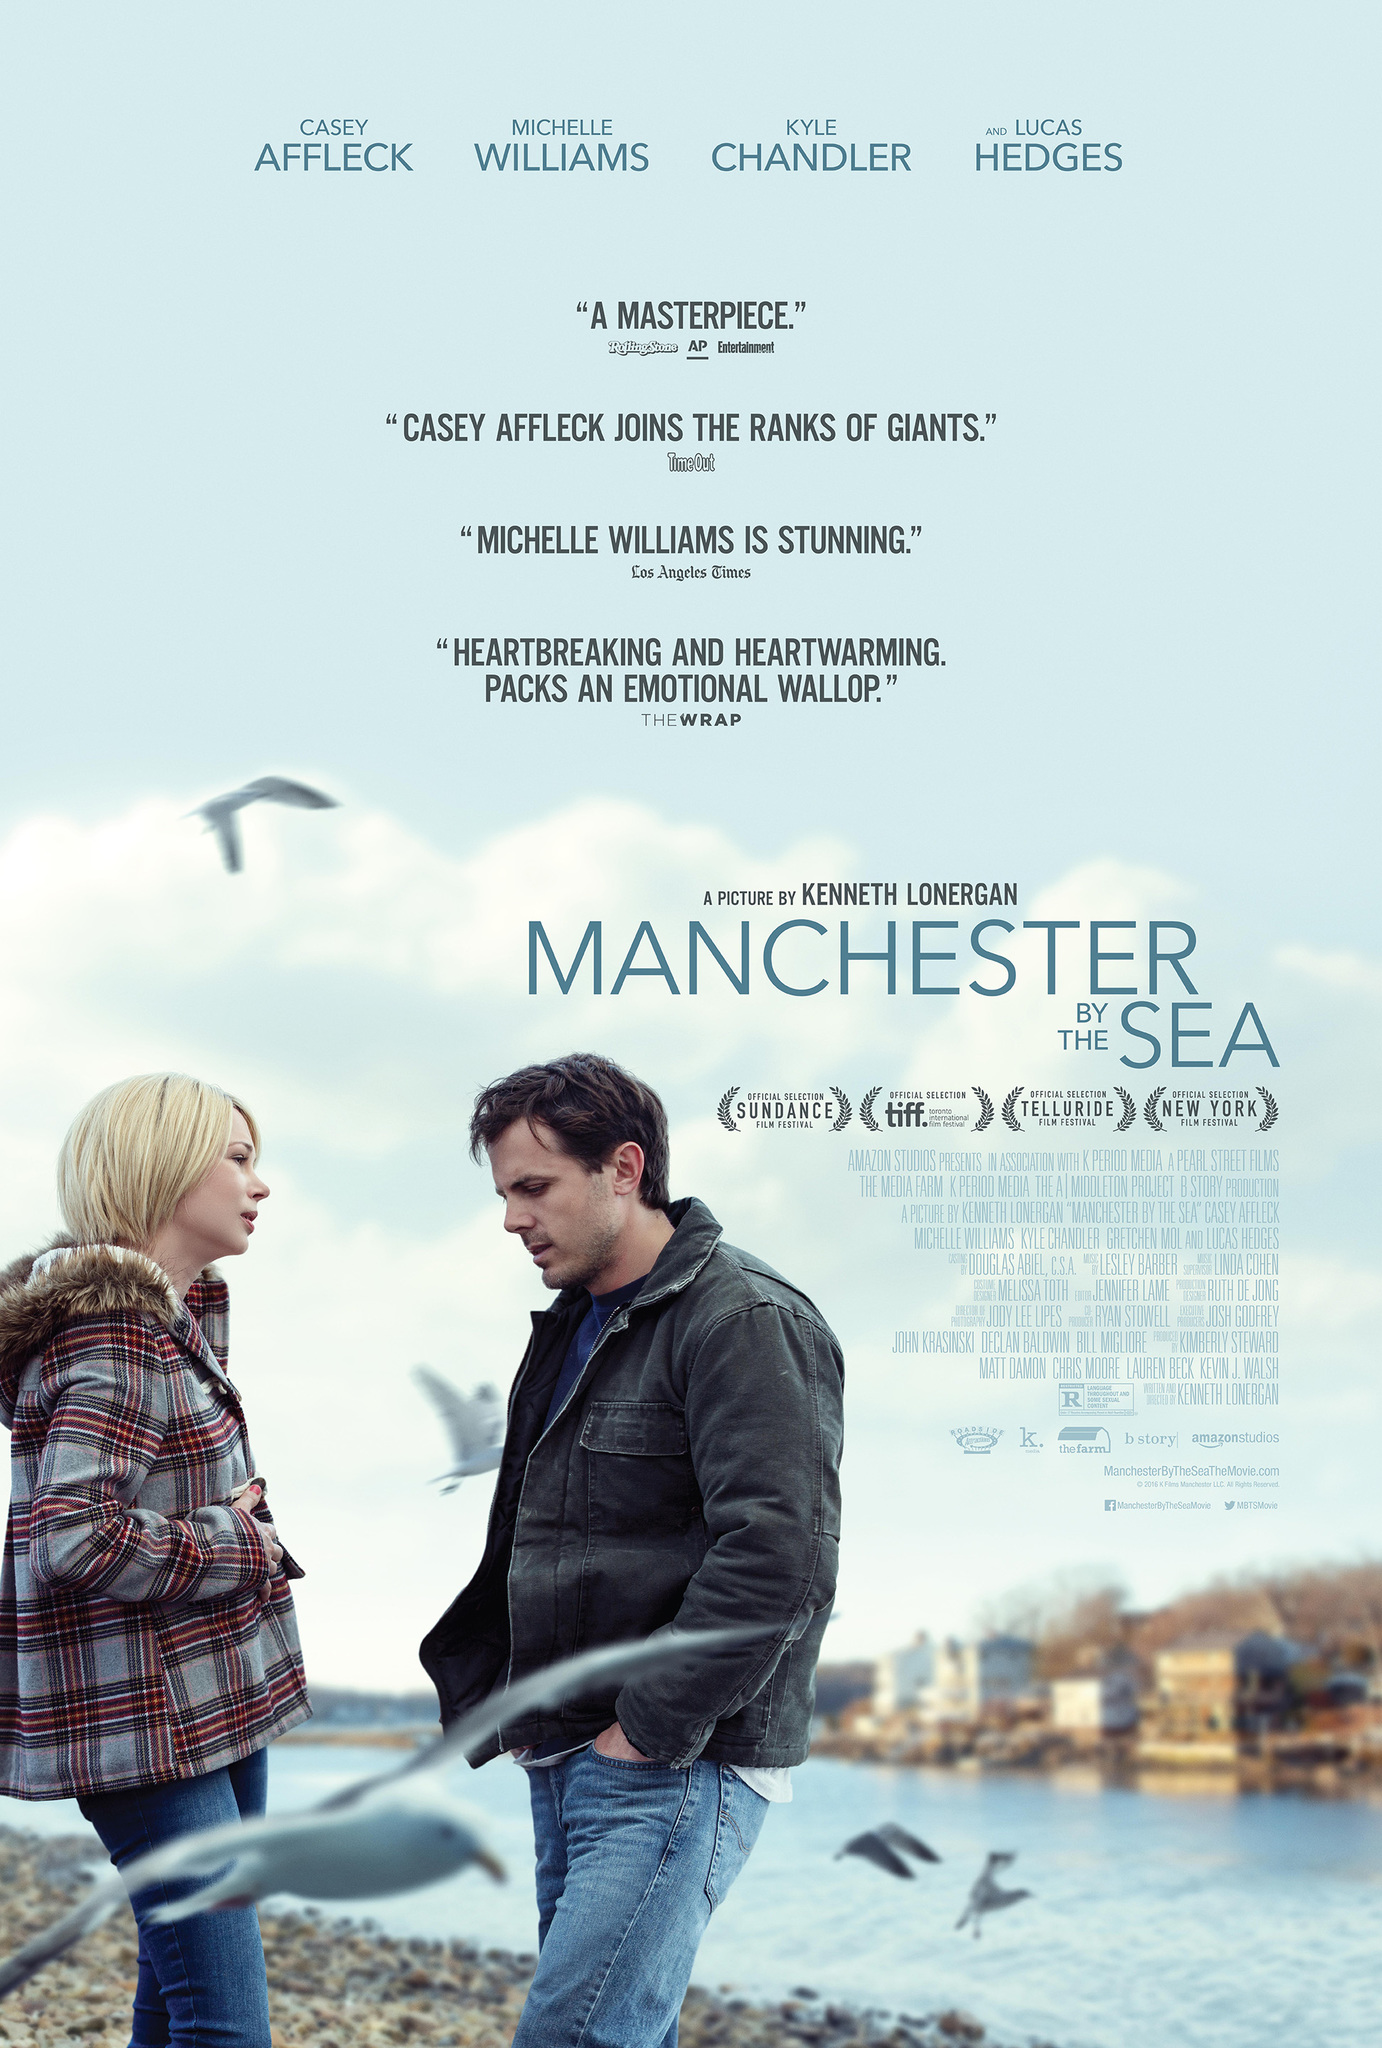 Nonton film Manchester by the Sea layarkaca21 indoxx1 ganool online streaming terbaru